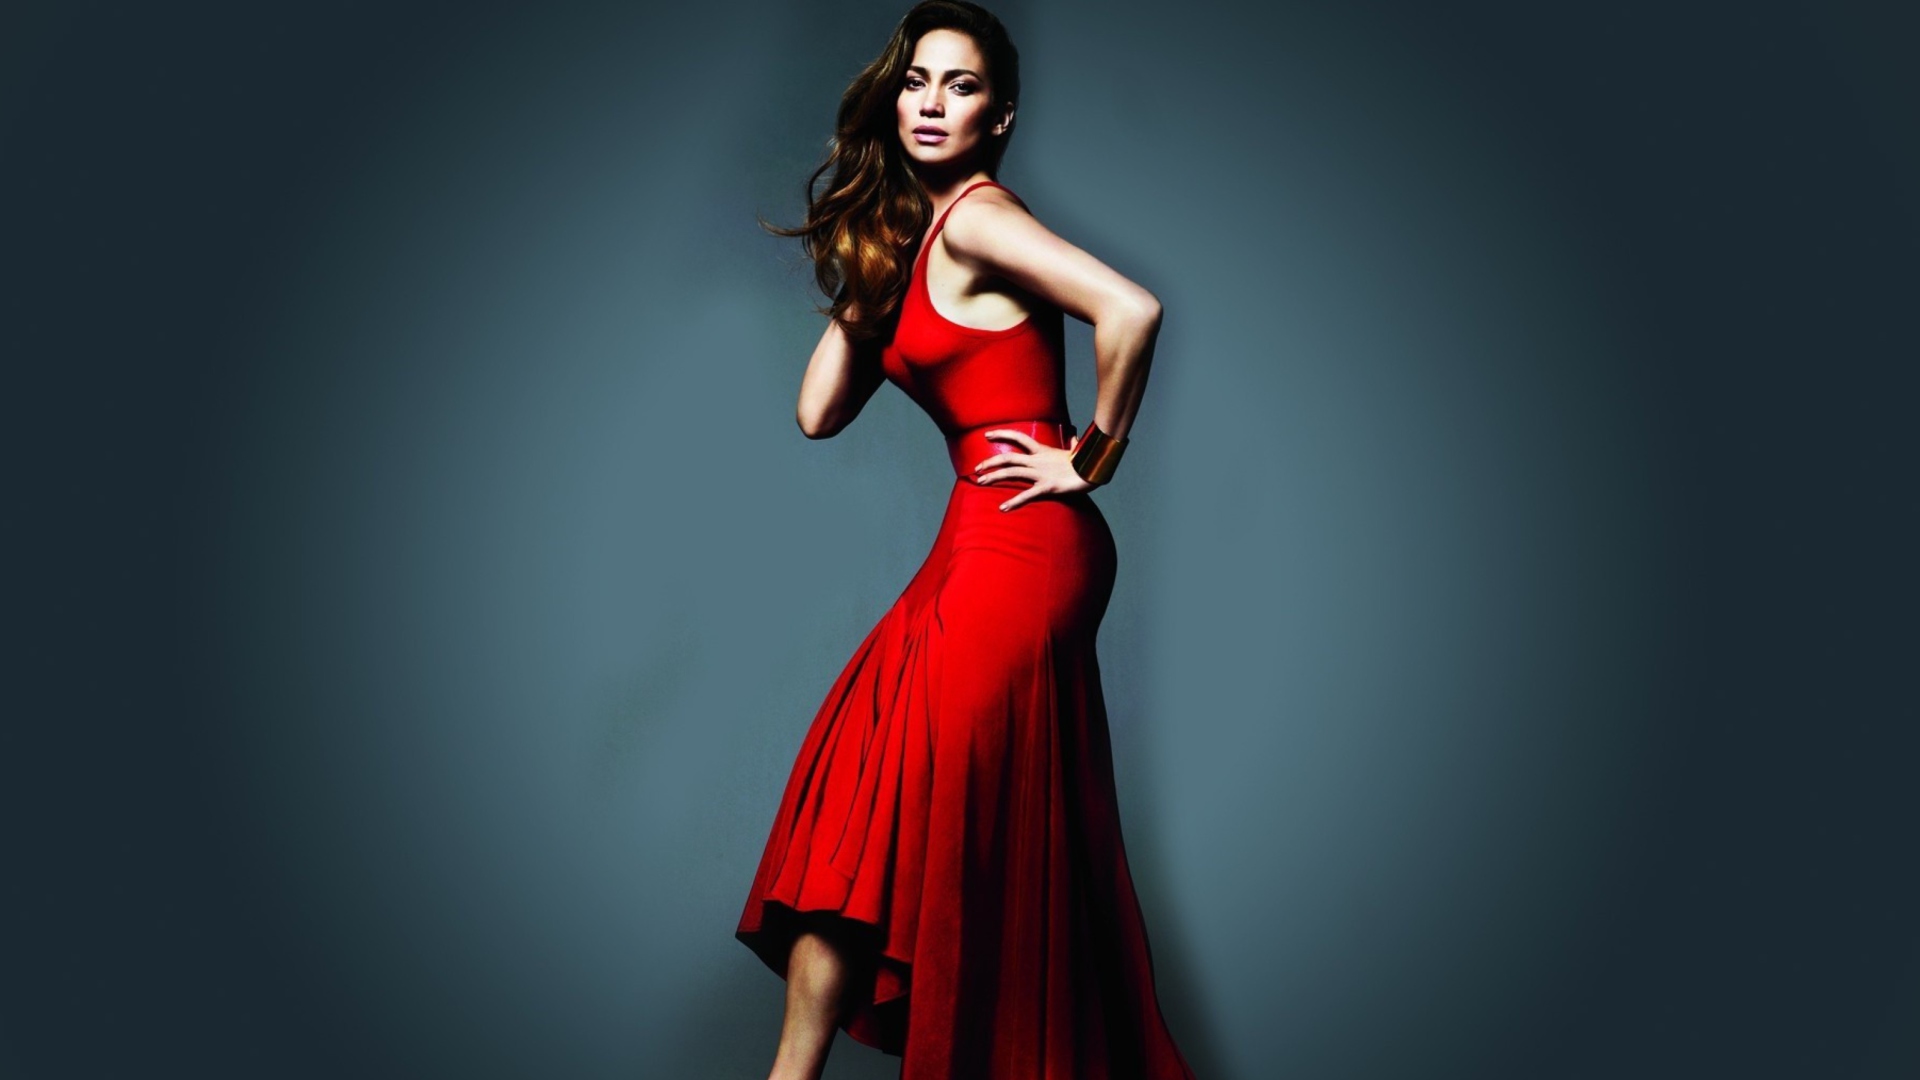 Обои J Lo In Gorgeous Red Dress 1920x1080